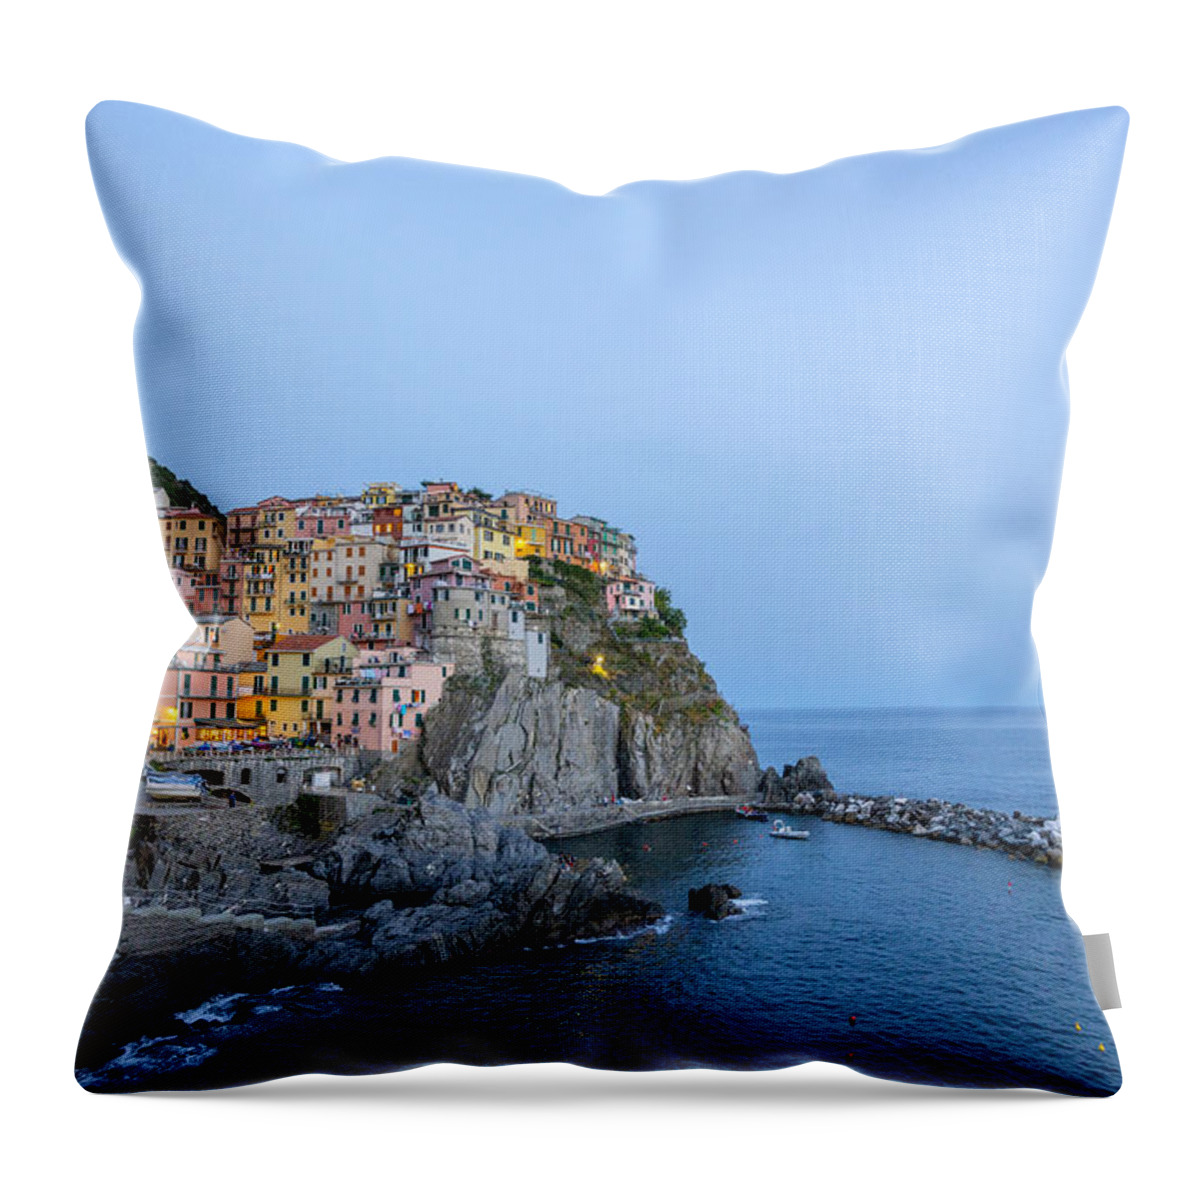 Estock Throw Pillow featuring the digital art Italy, Liguria, La Spezia District, Riviera Di Levante, Cinque Terre, Manarola by Kate Hockenhull